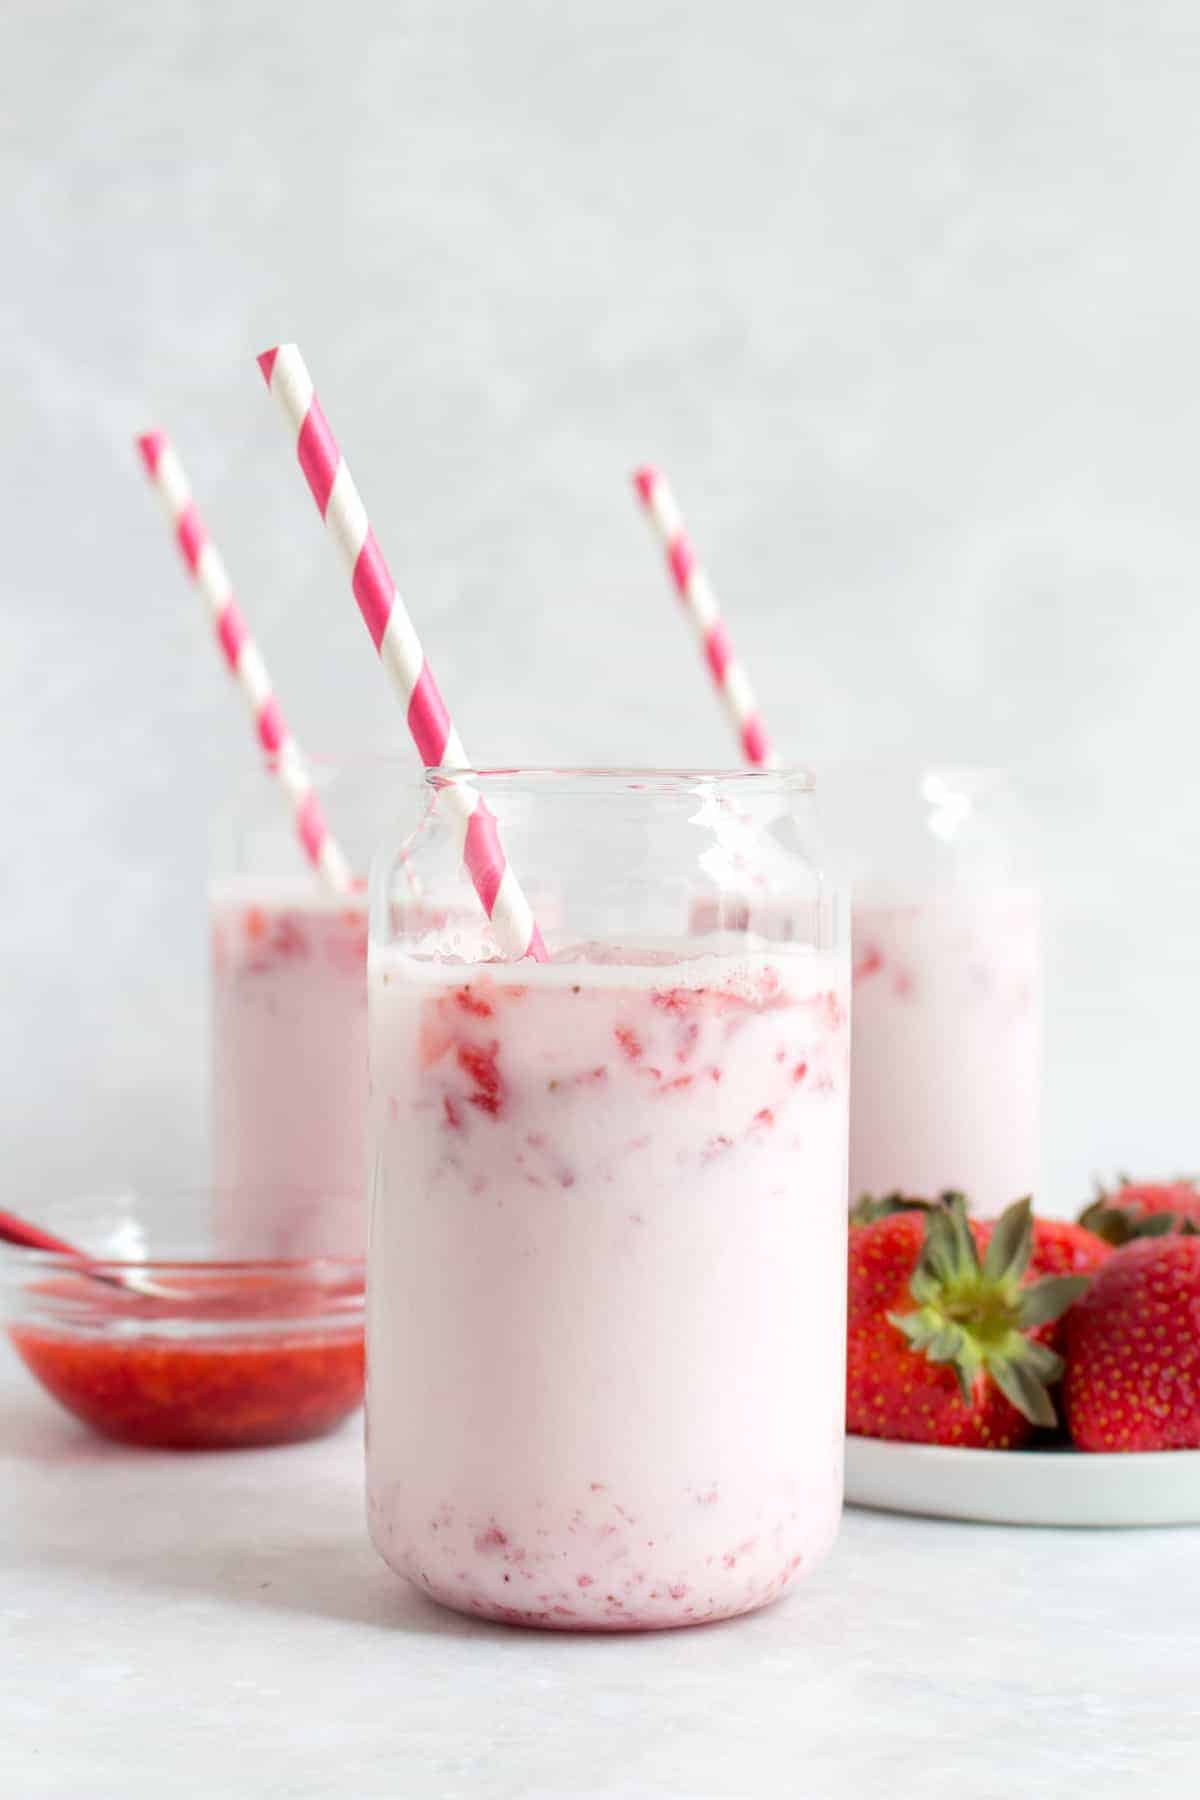 Three glasses of strawberry milk with pink striped straws.